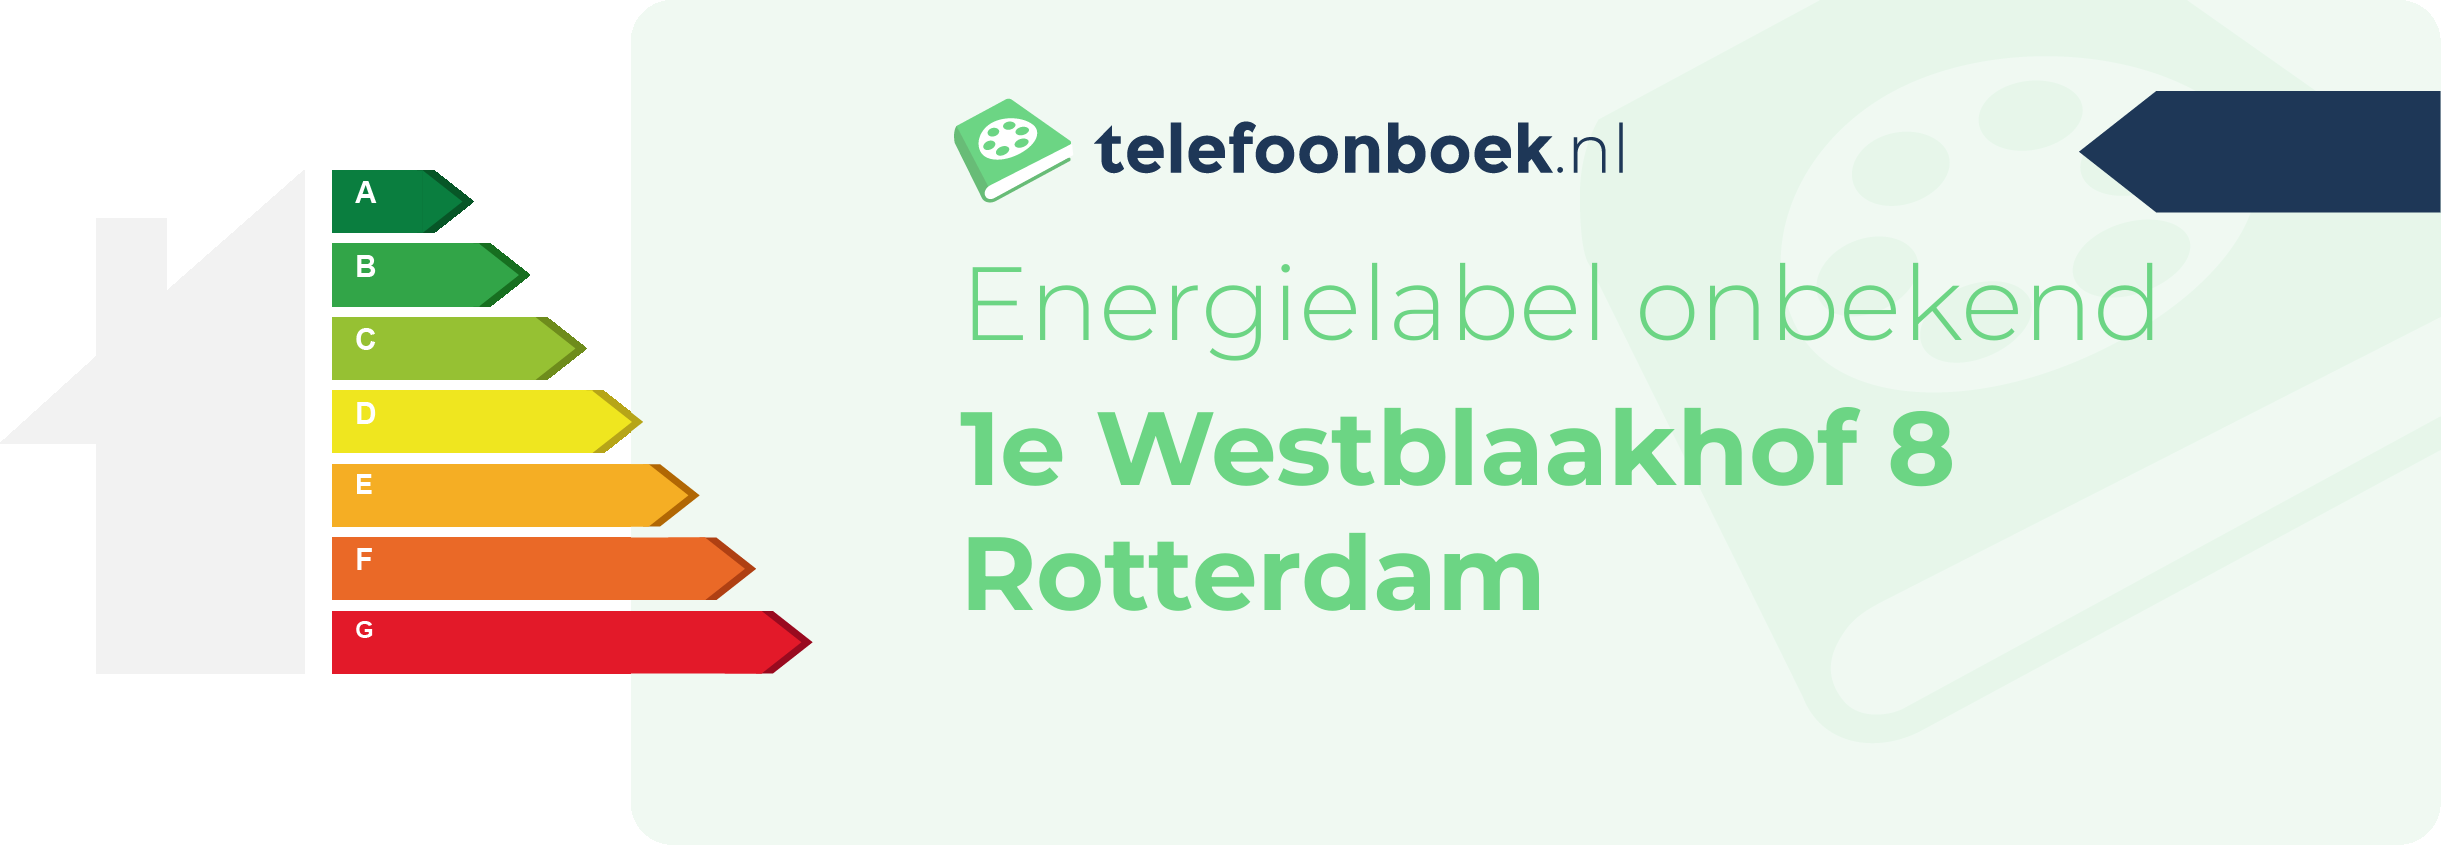 Energielabel 1e Westblaakhof 8 Rotterdam